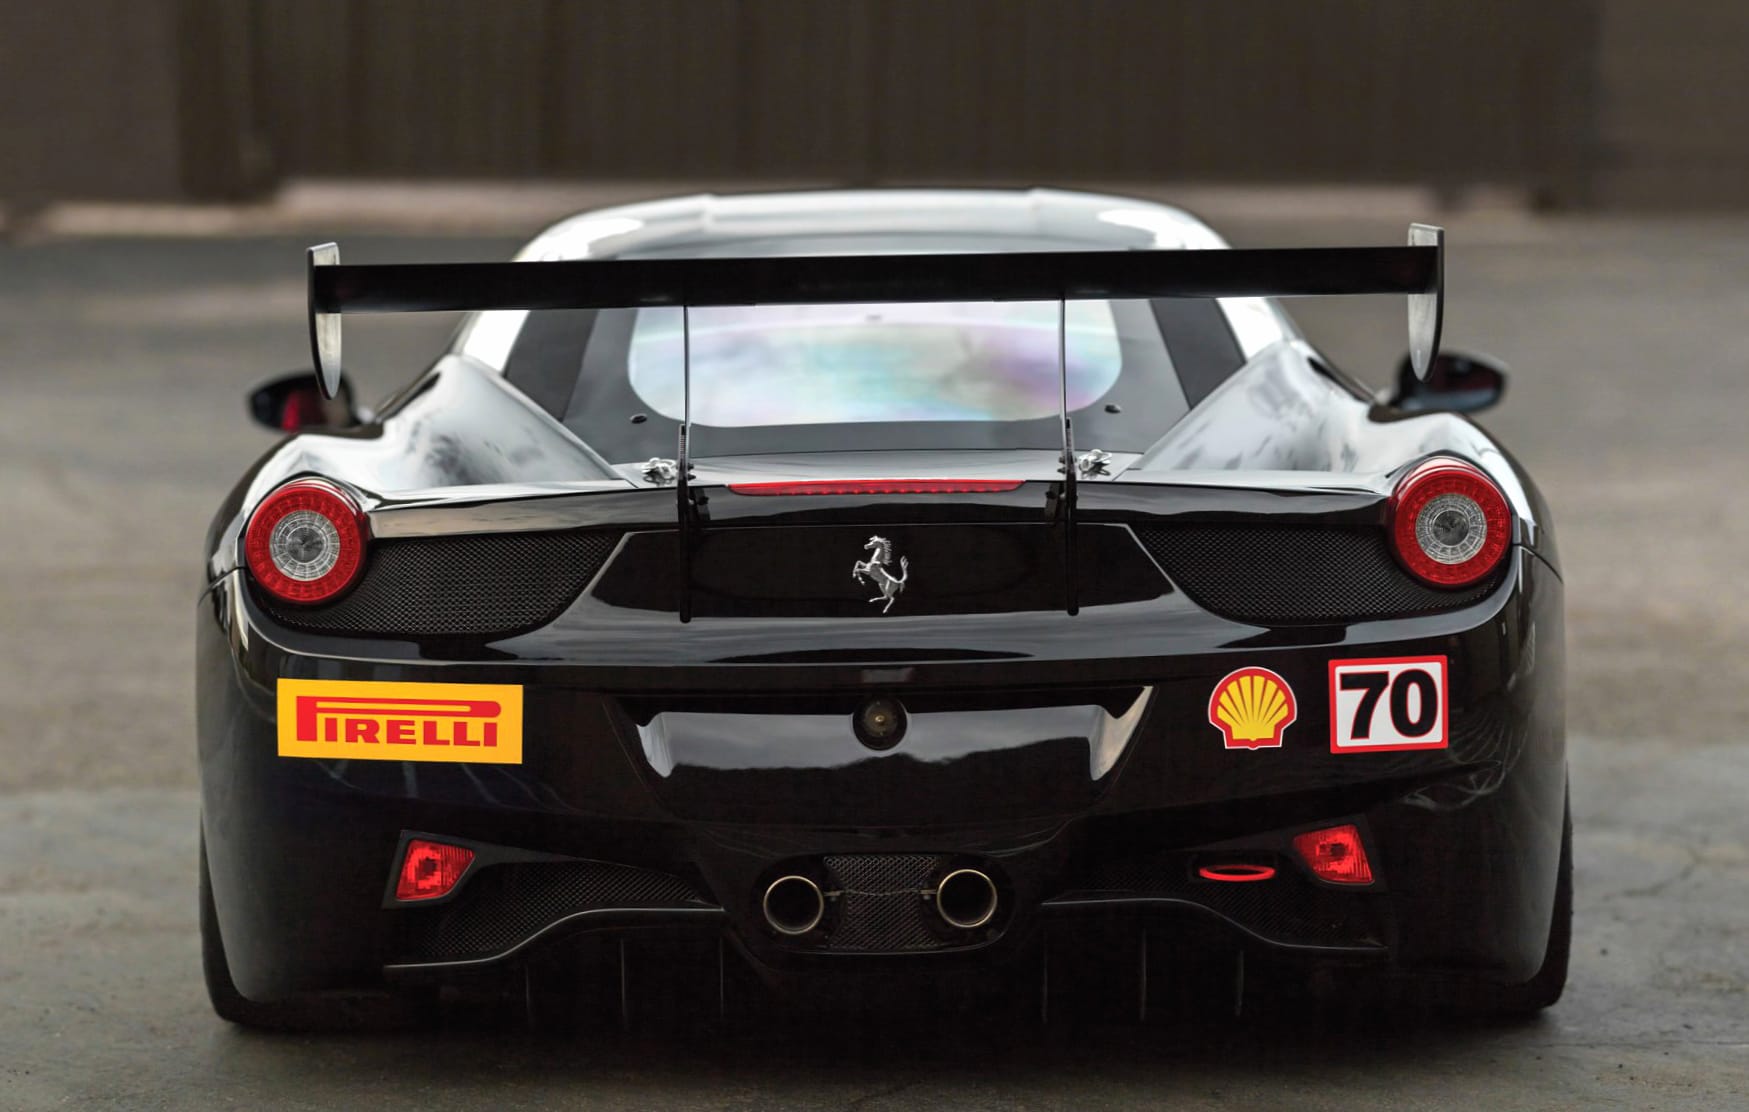 Ferrari 458 Challenge Evoluzione at 1334 x 750 iPhone 7 size wallpapers HD quality